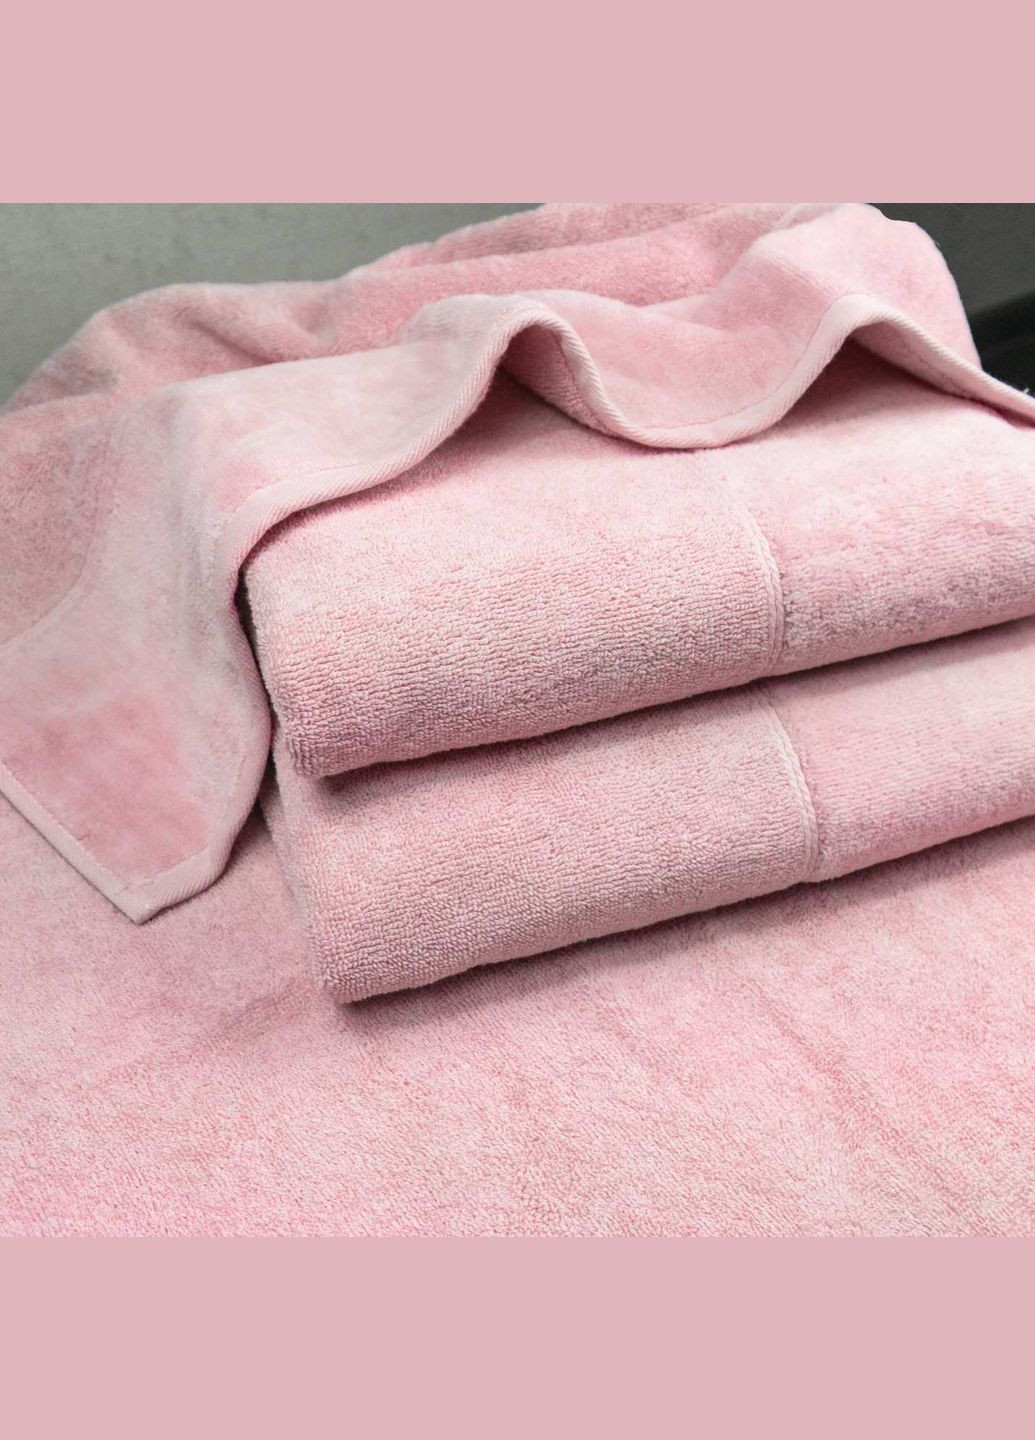 GM Textile набор велюр/махра полотенец 3шт 40x70см, 50x90см, 70x140см premium milado 550г/м2 () розовый производство -